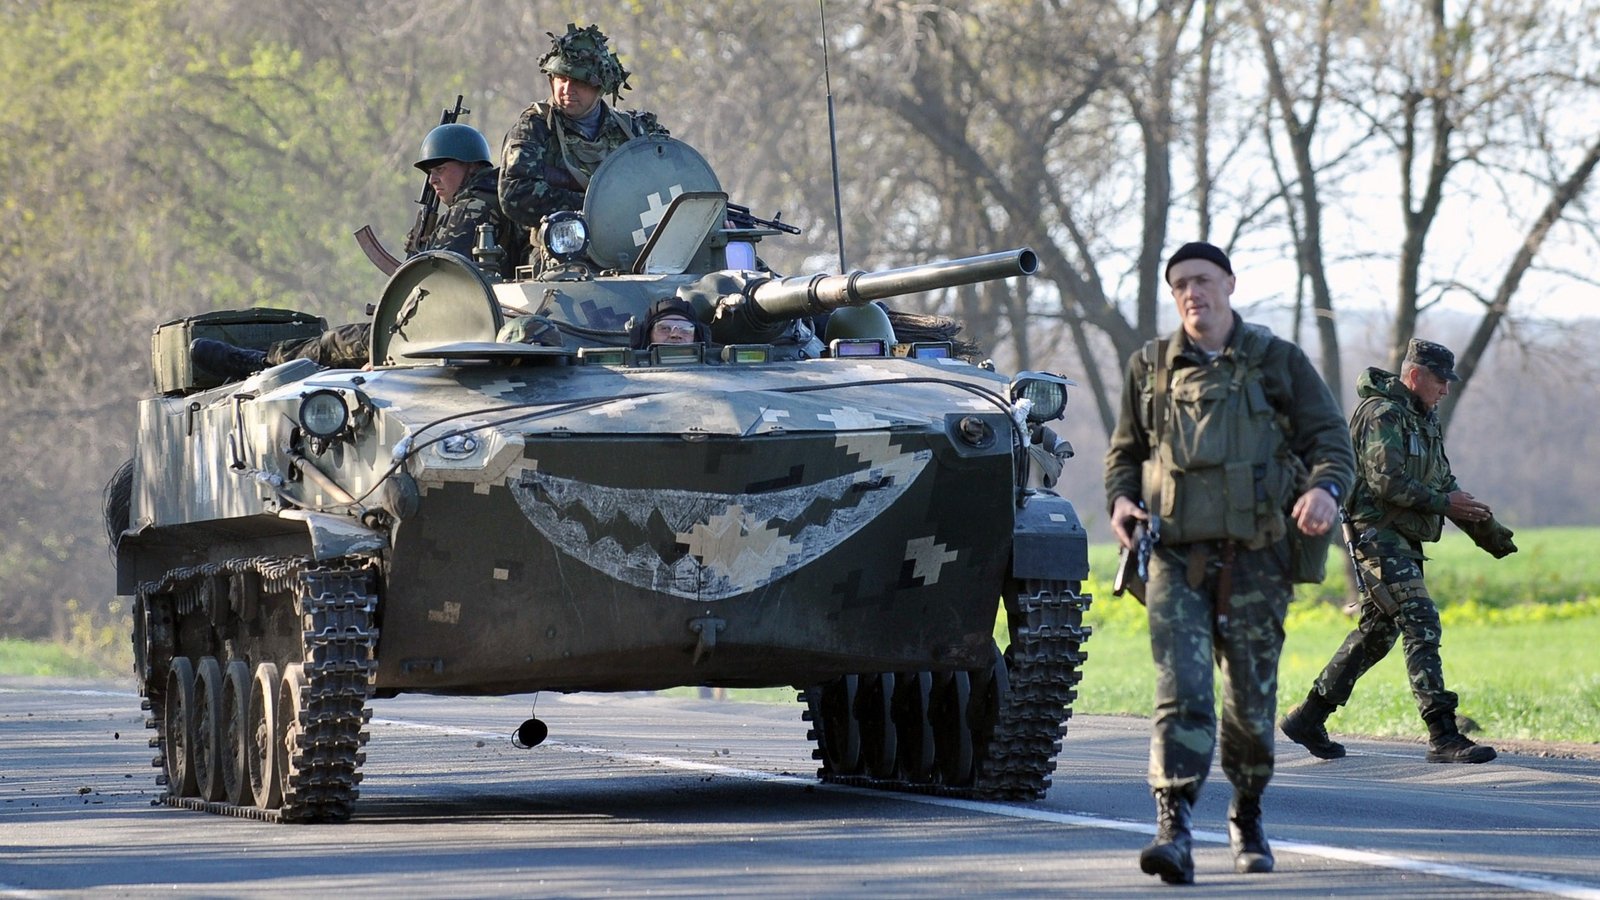 Ukraine says Russia wants to start World War III